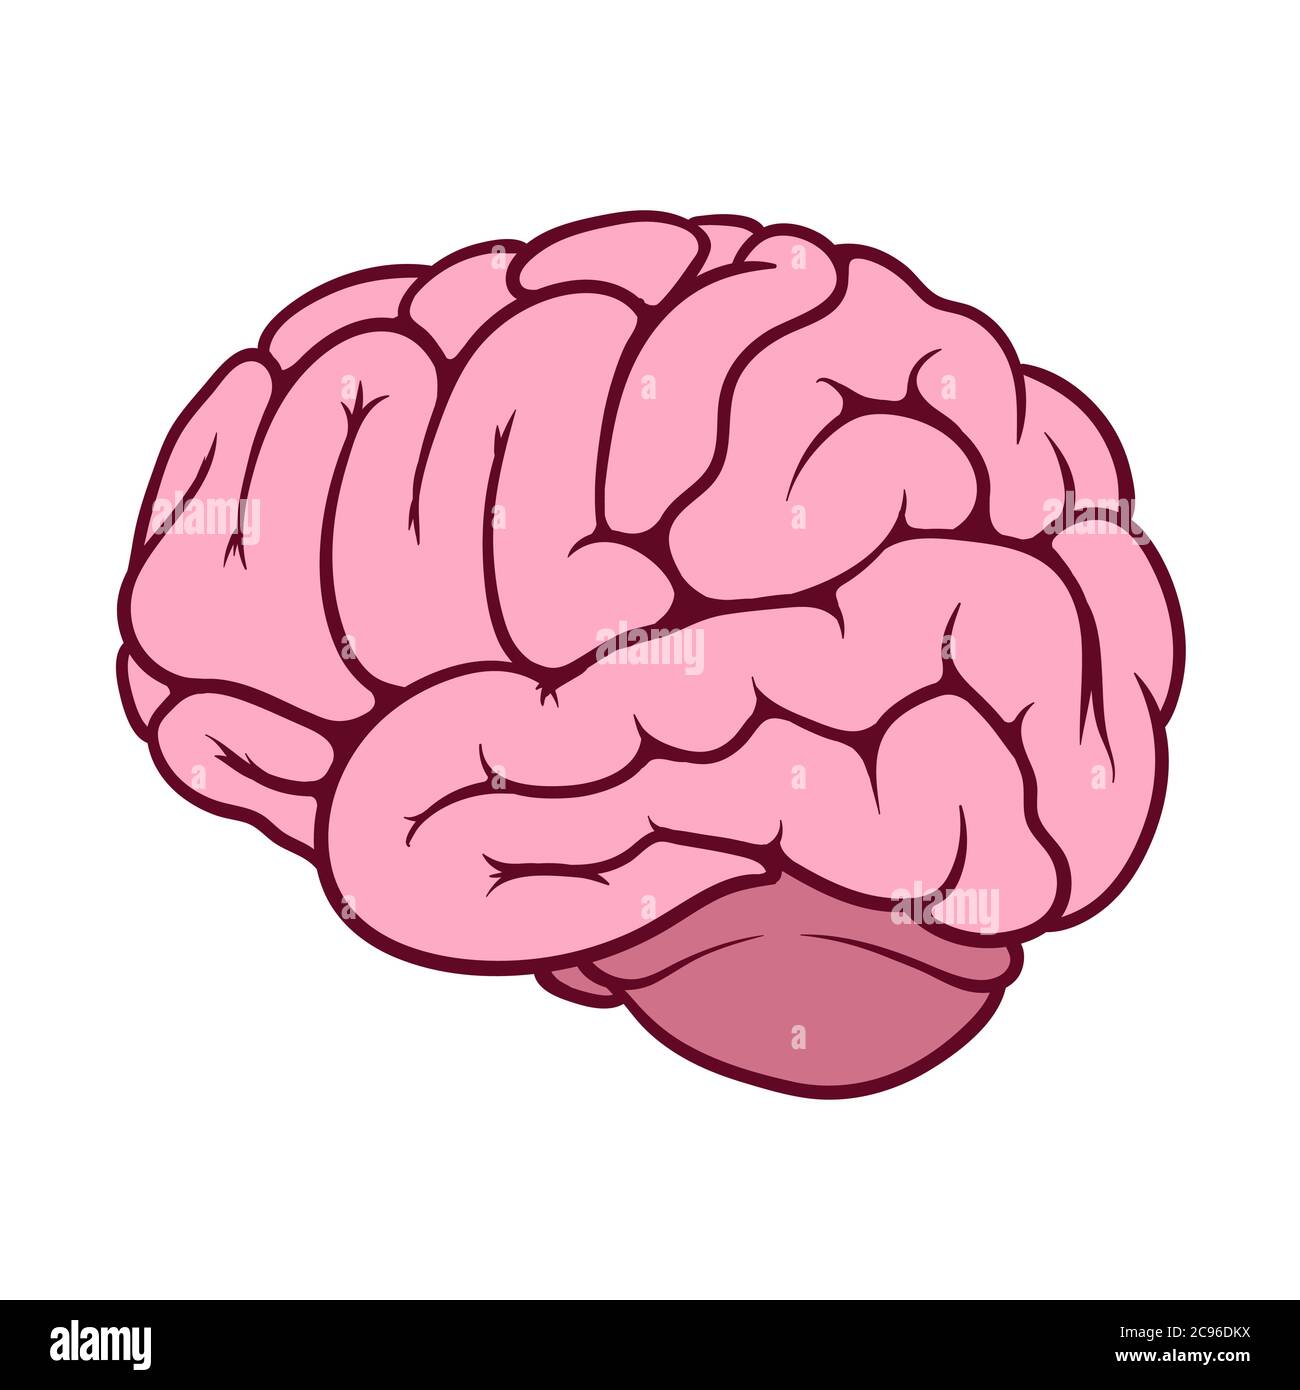 Pink illustration of a human brain Stock Vector Image & Art - Alamy